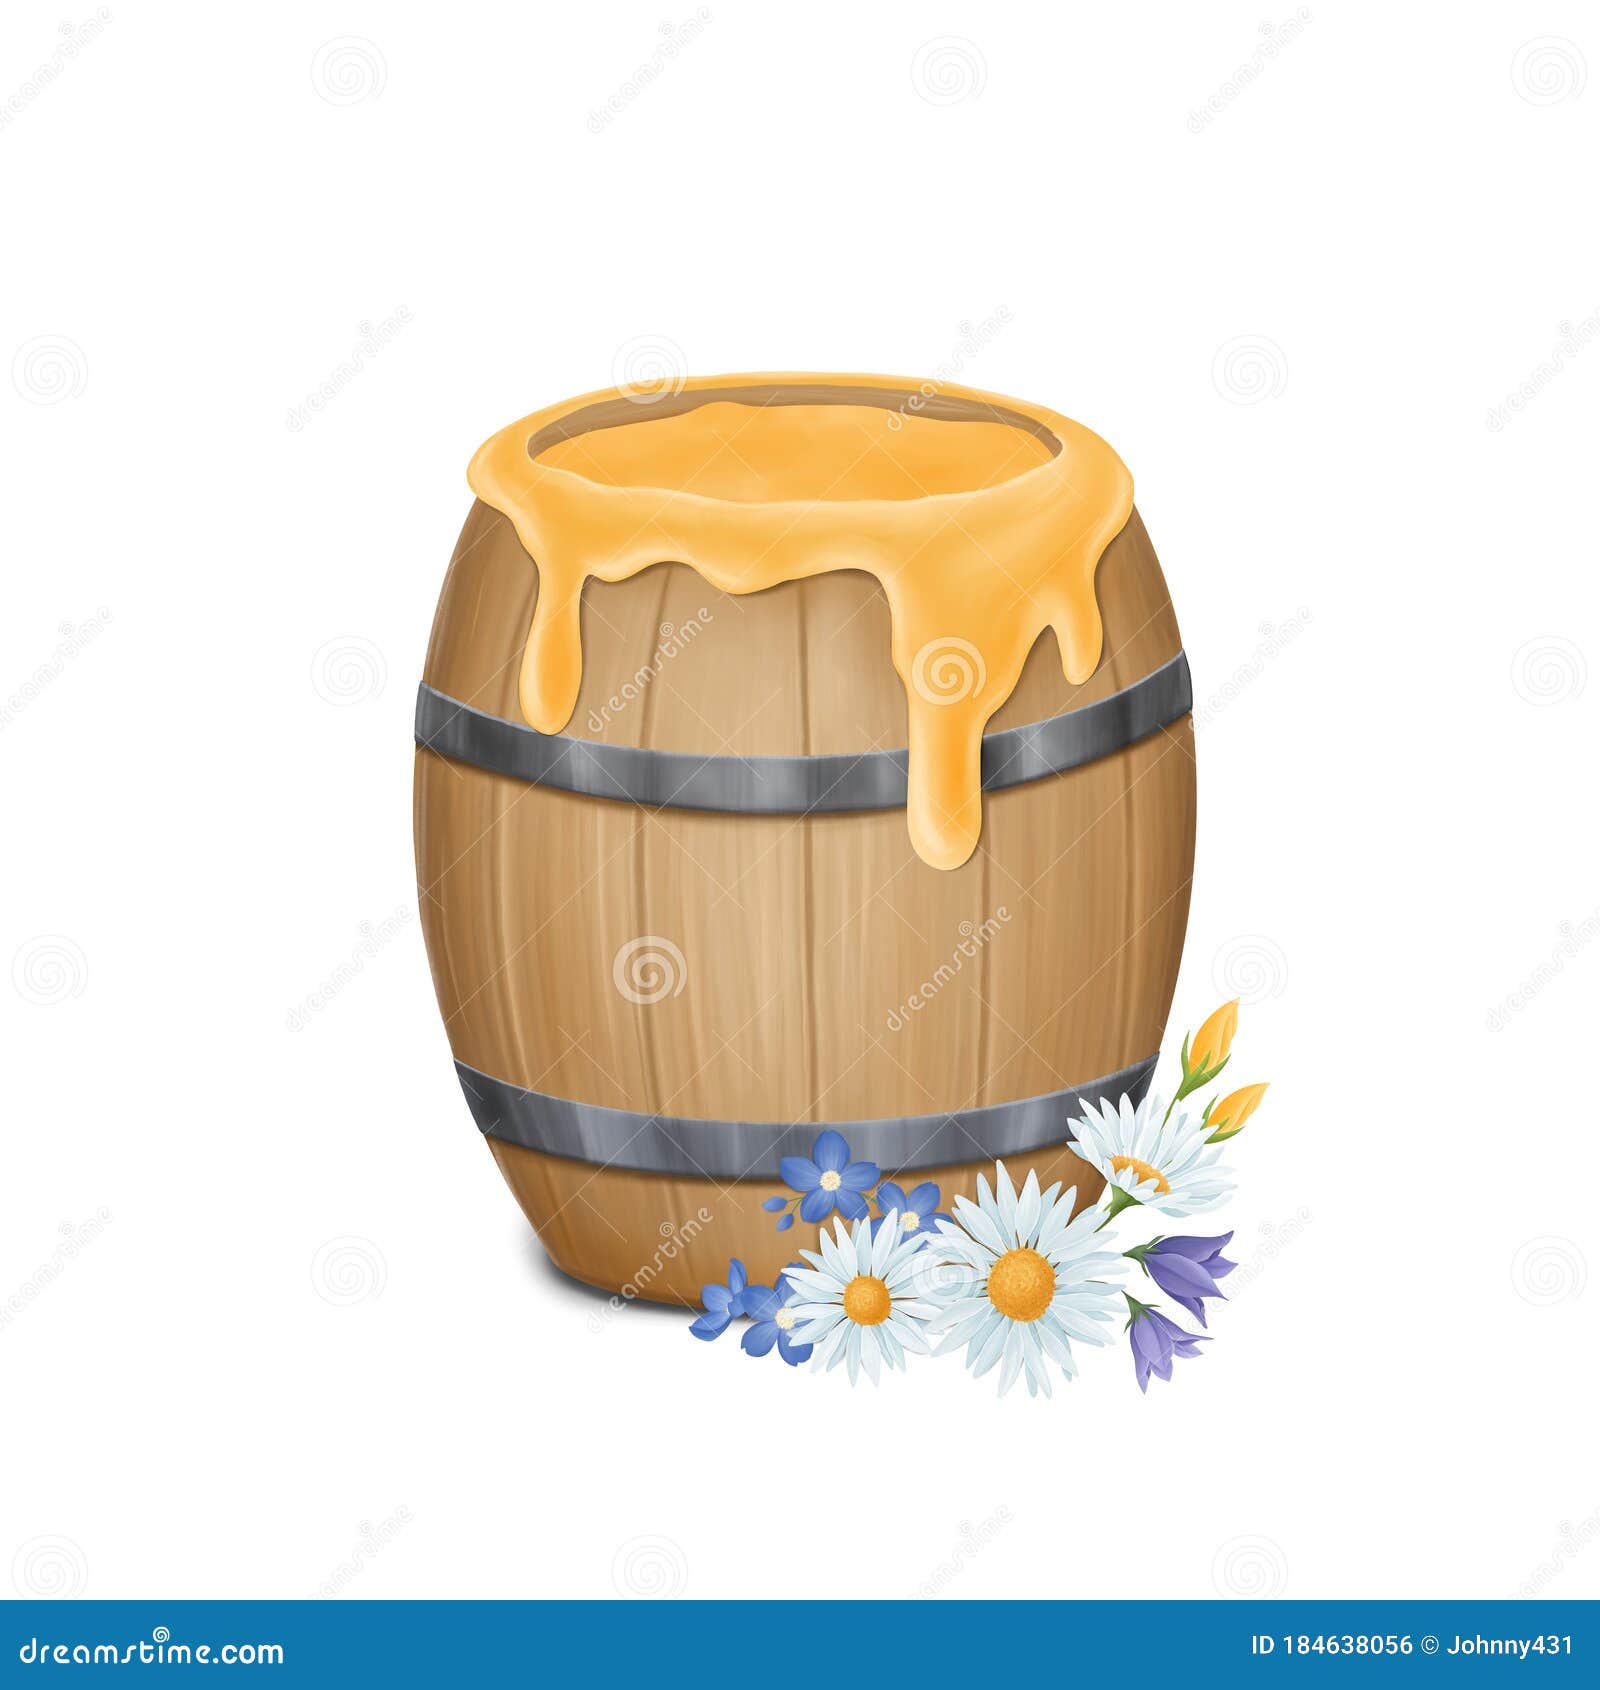 Wooden Barrel With Honey On A White Background Stock Illustration Illustration Of Wood Dessert